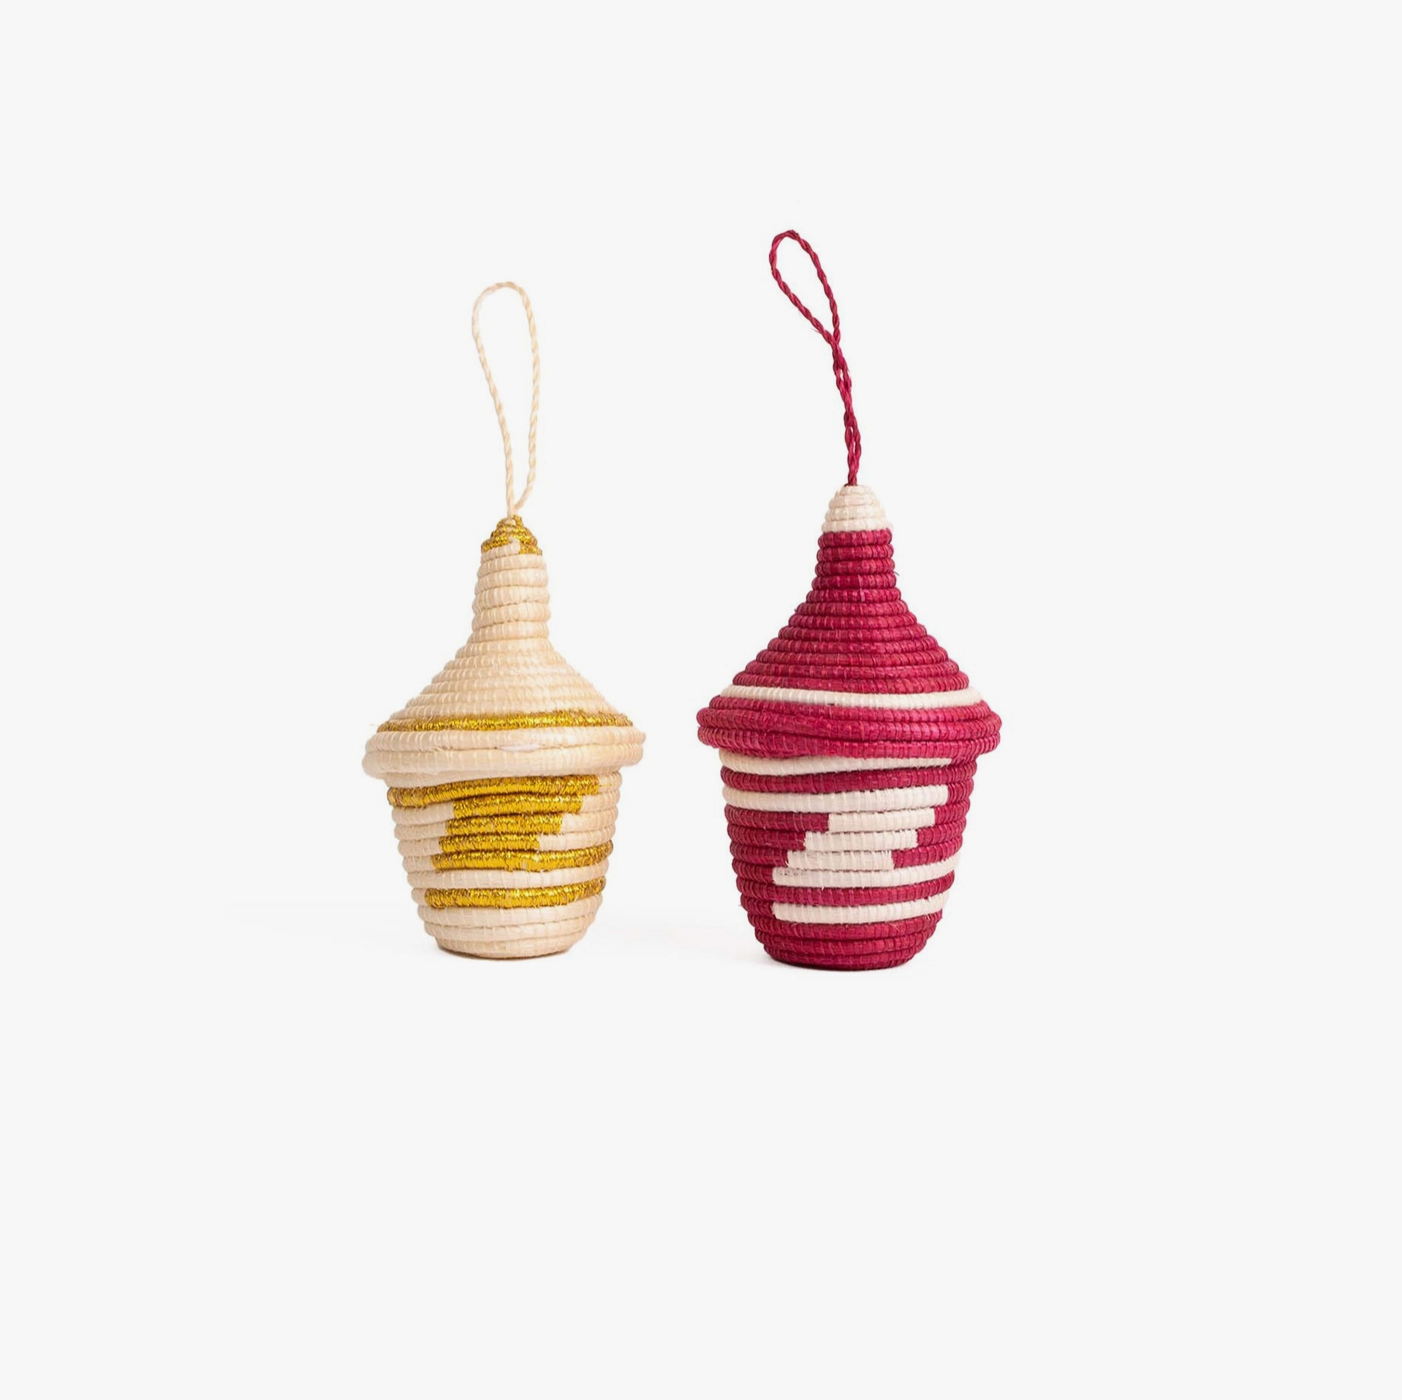 Treasure Lidded Basket Ornaments - Red & Gold - Set of 2